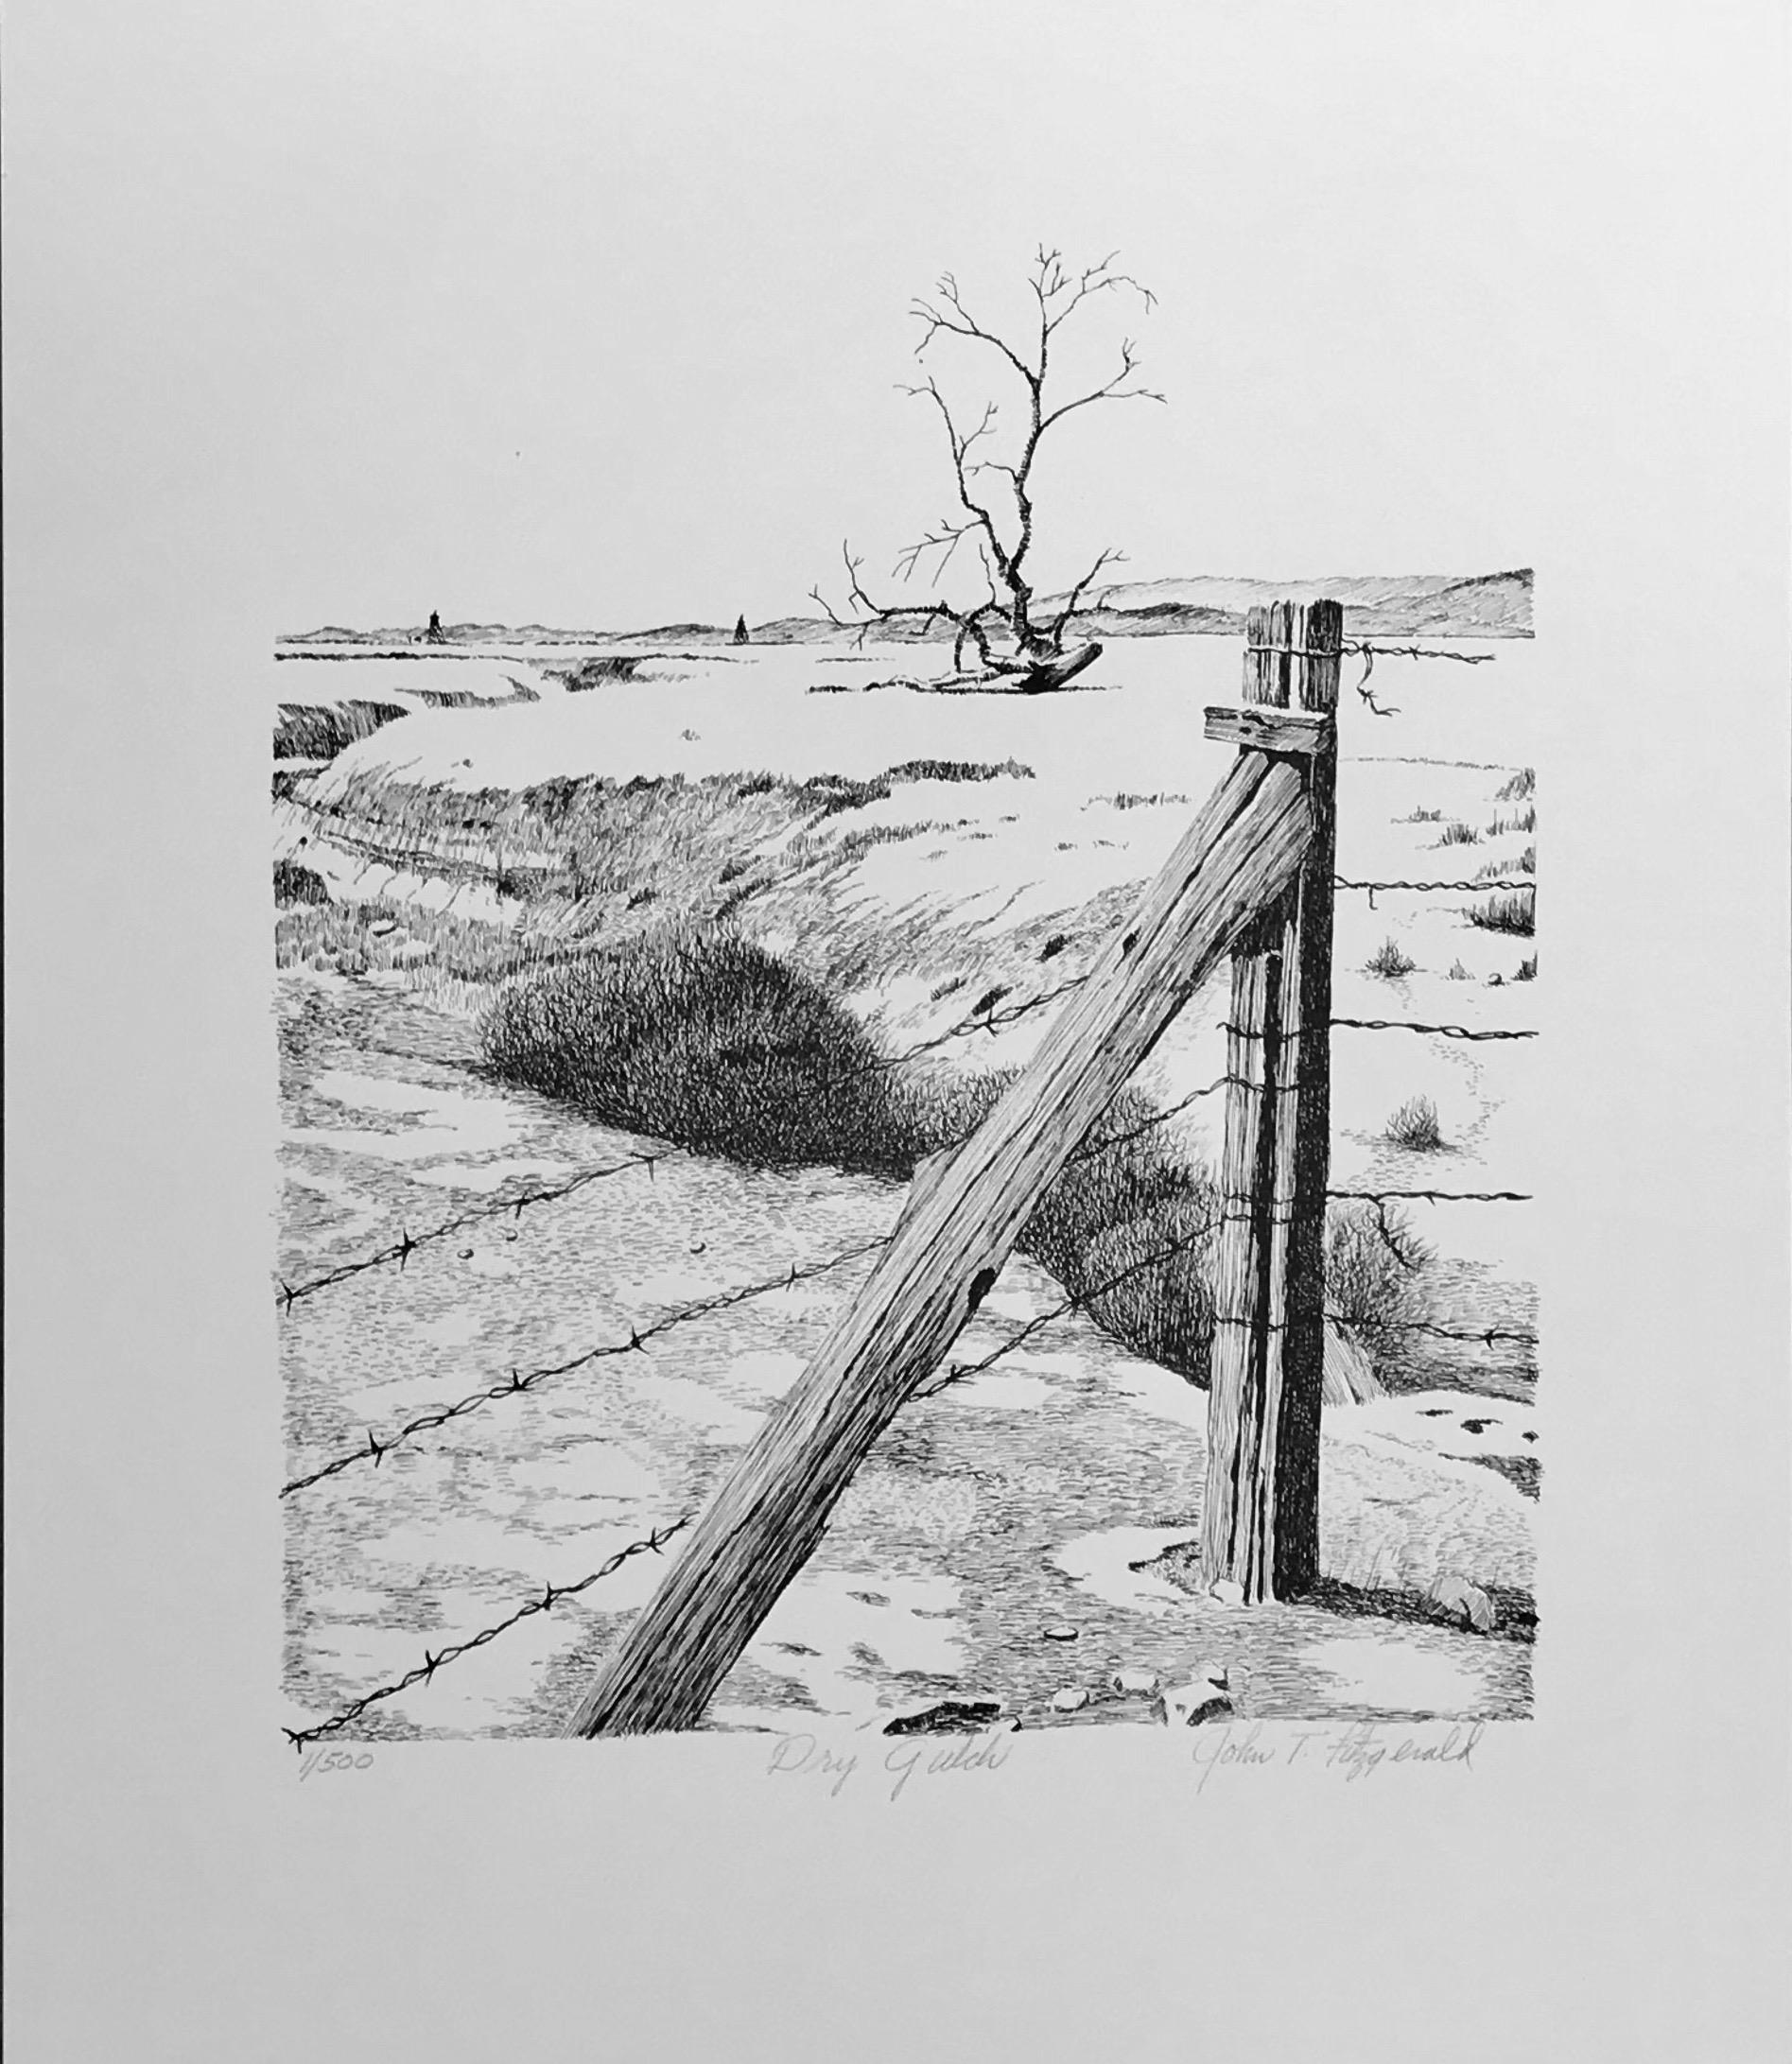 Dry Gulch by John T Fitzgerald,black, white desert print barbed wire tree desert